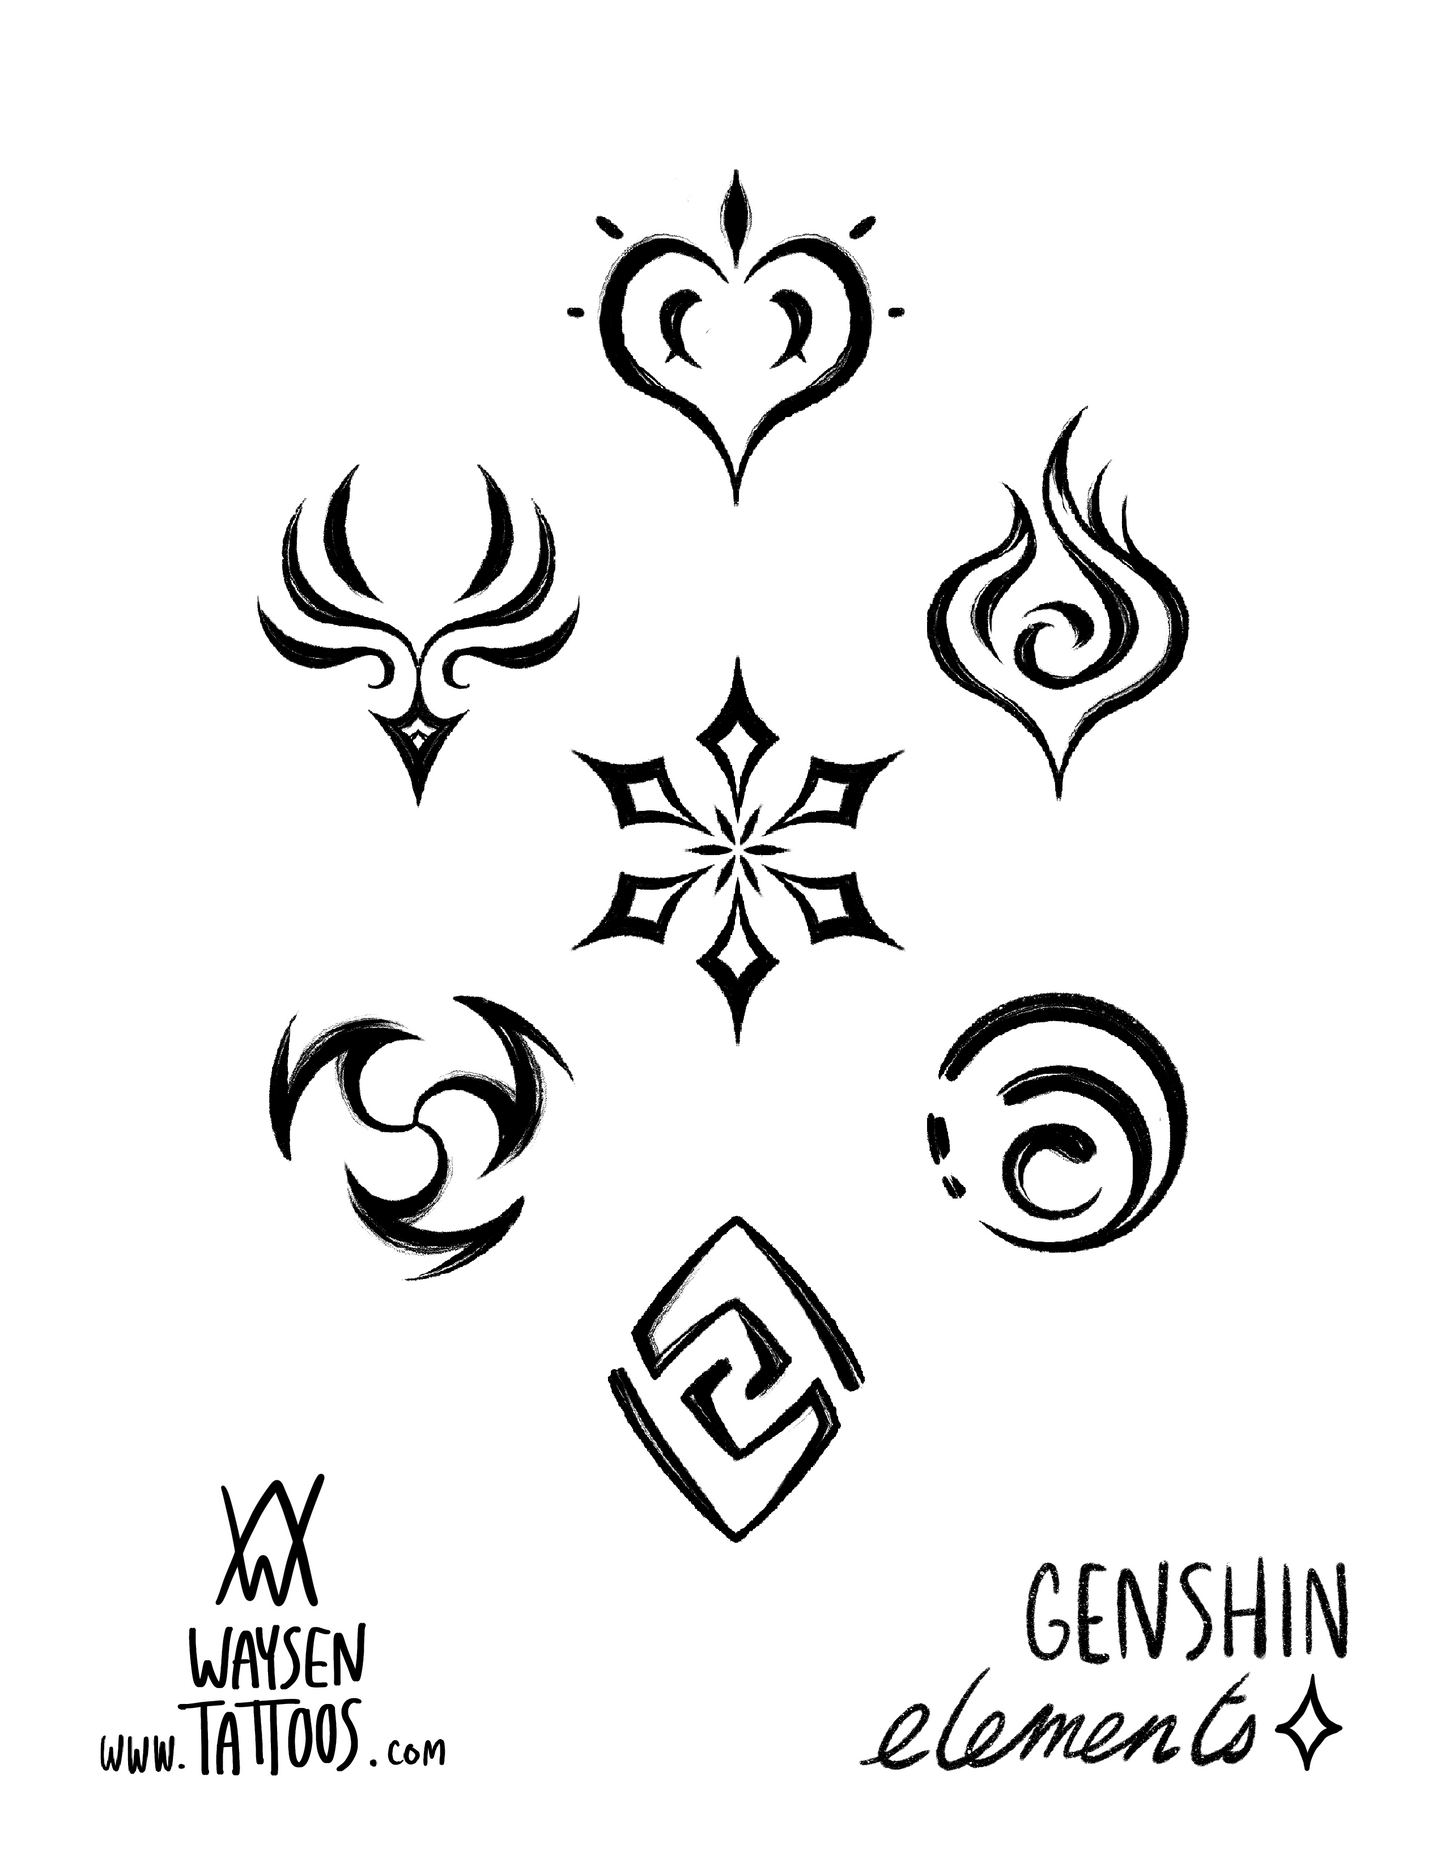 Genshin Elements